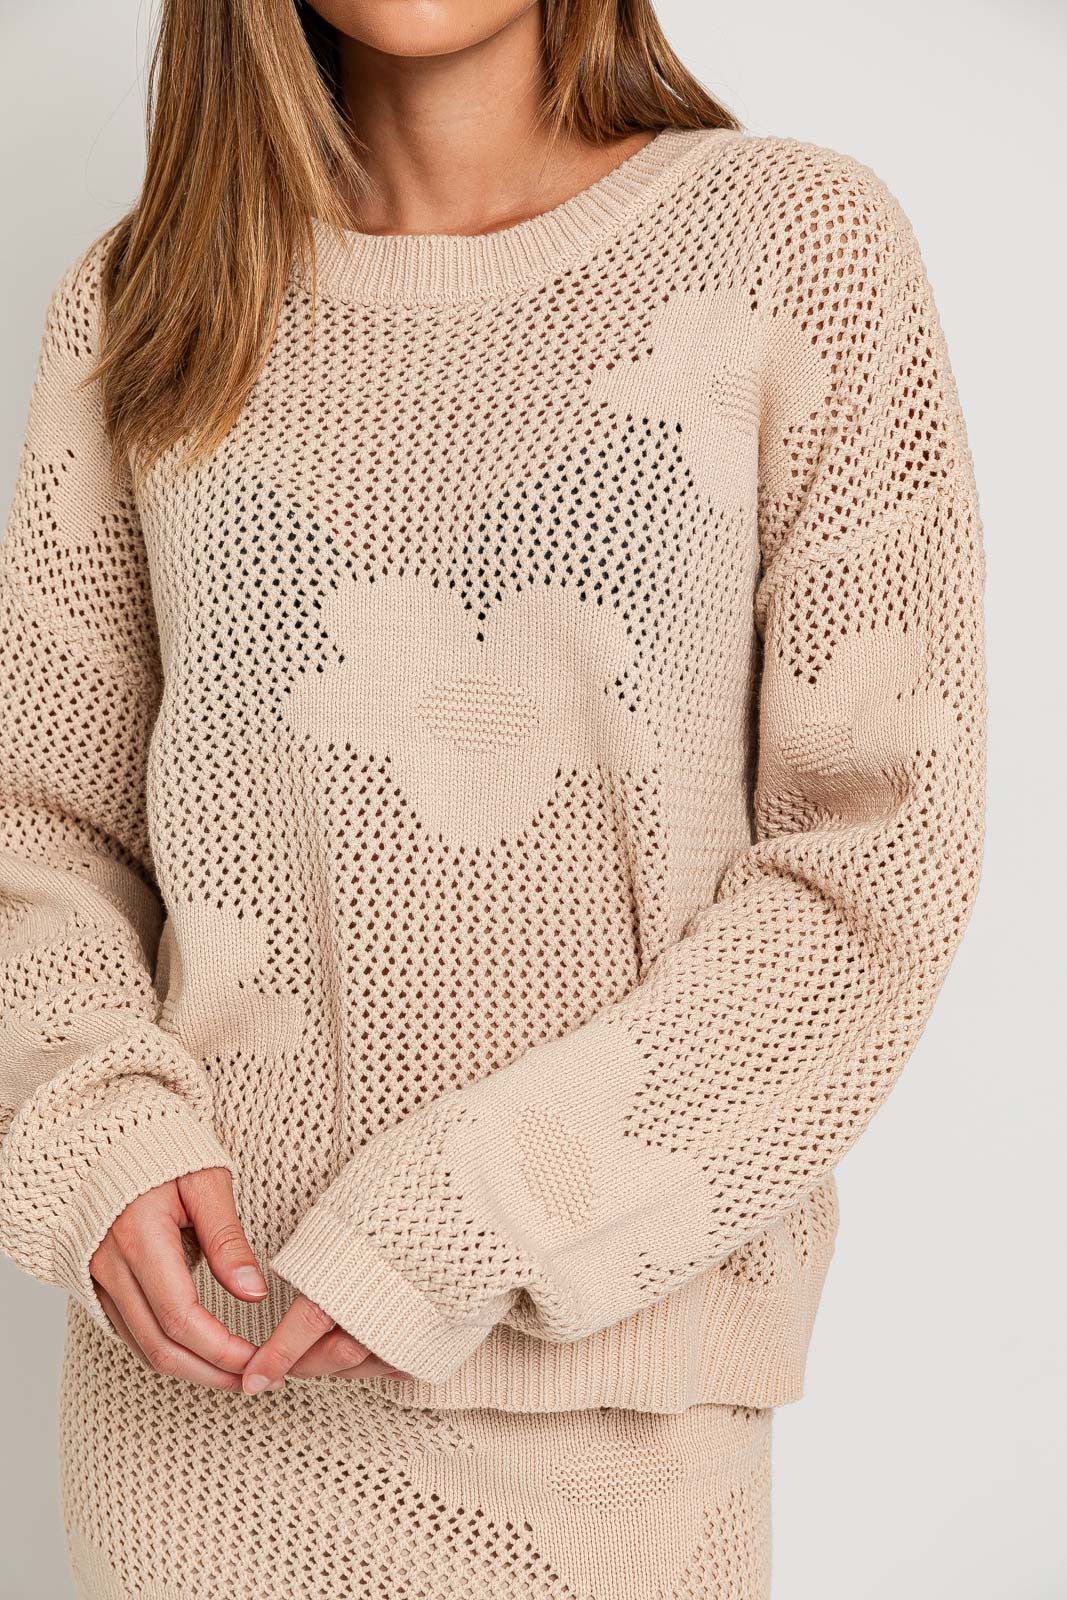 Pip Crochet Sweater Top